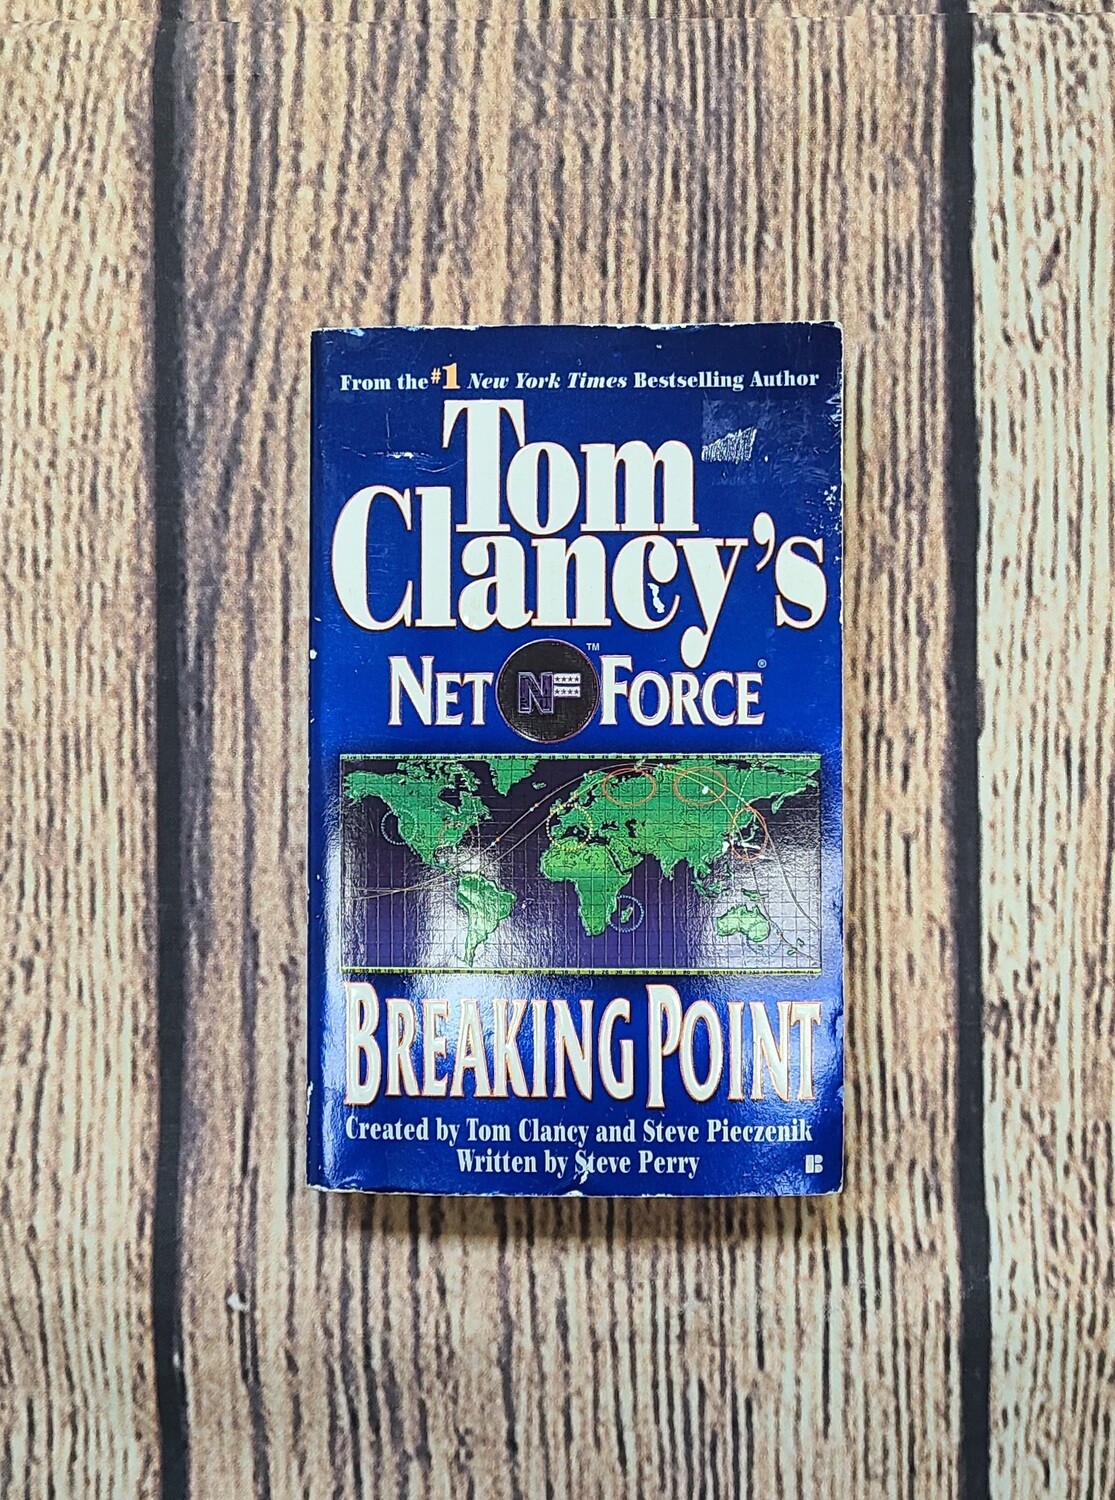 Breaking Point by Tom Clancy and Steve Pieczenik